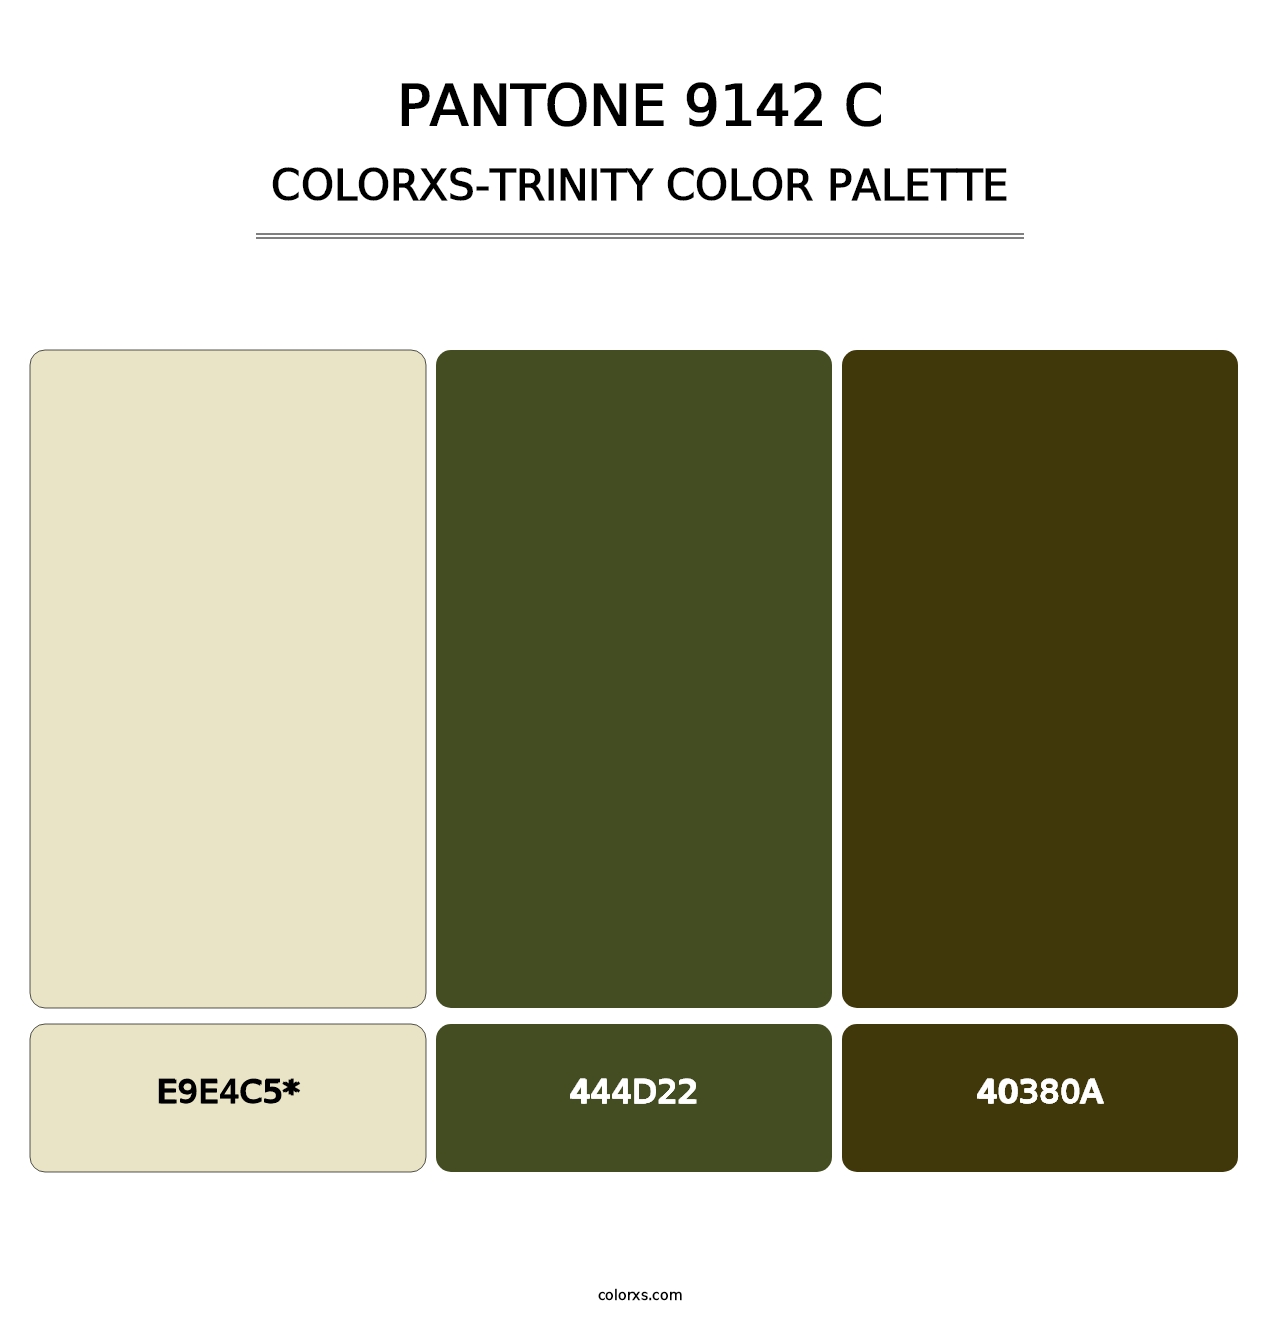 PANTONE 9142 C - Colorxs Trinity Palette